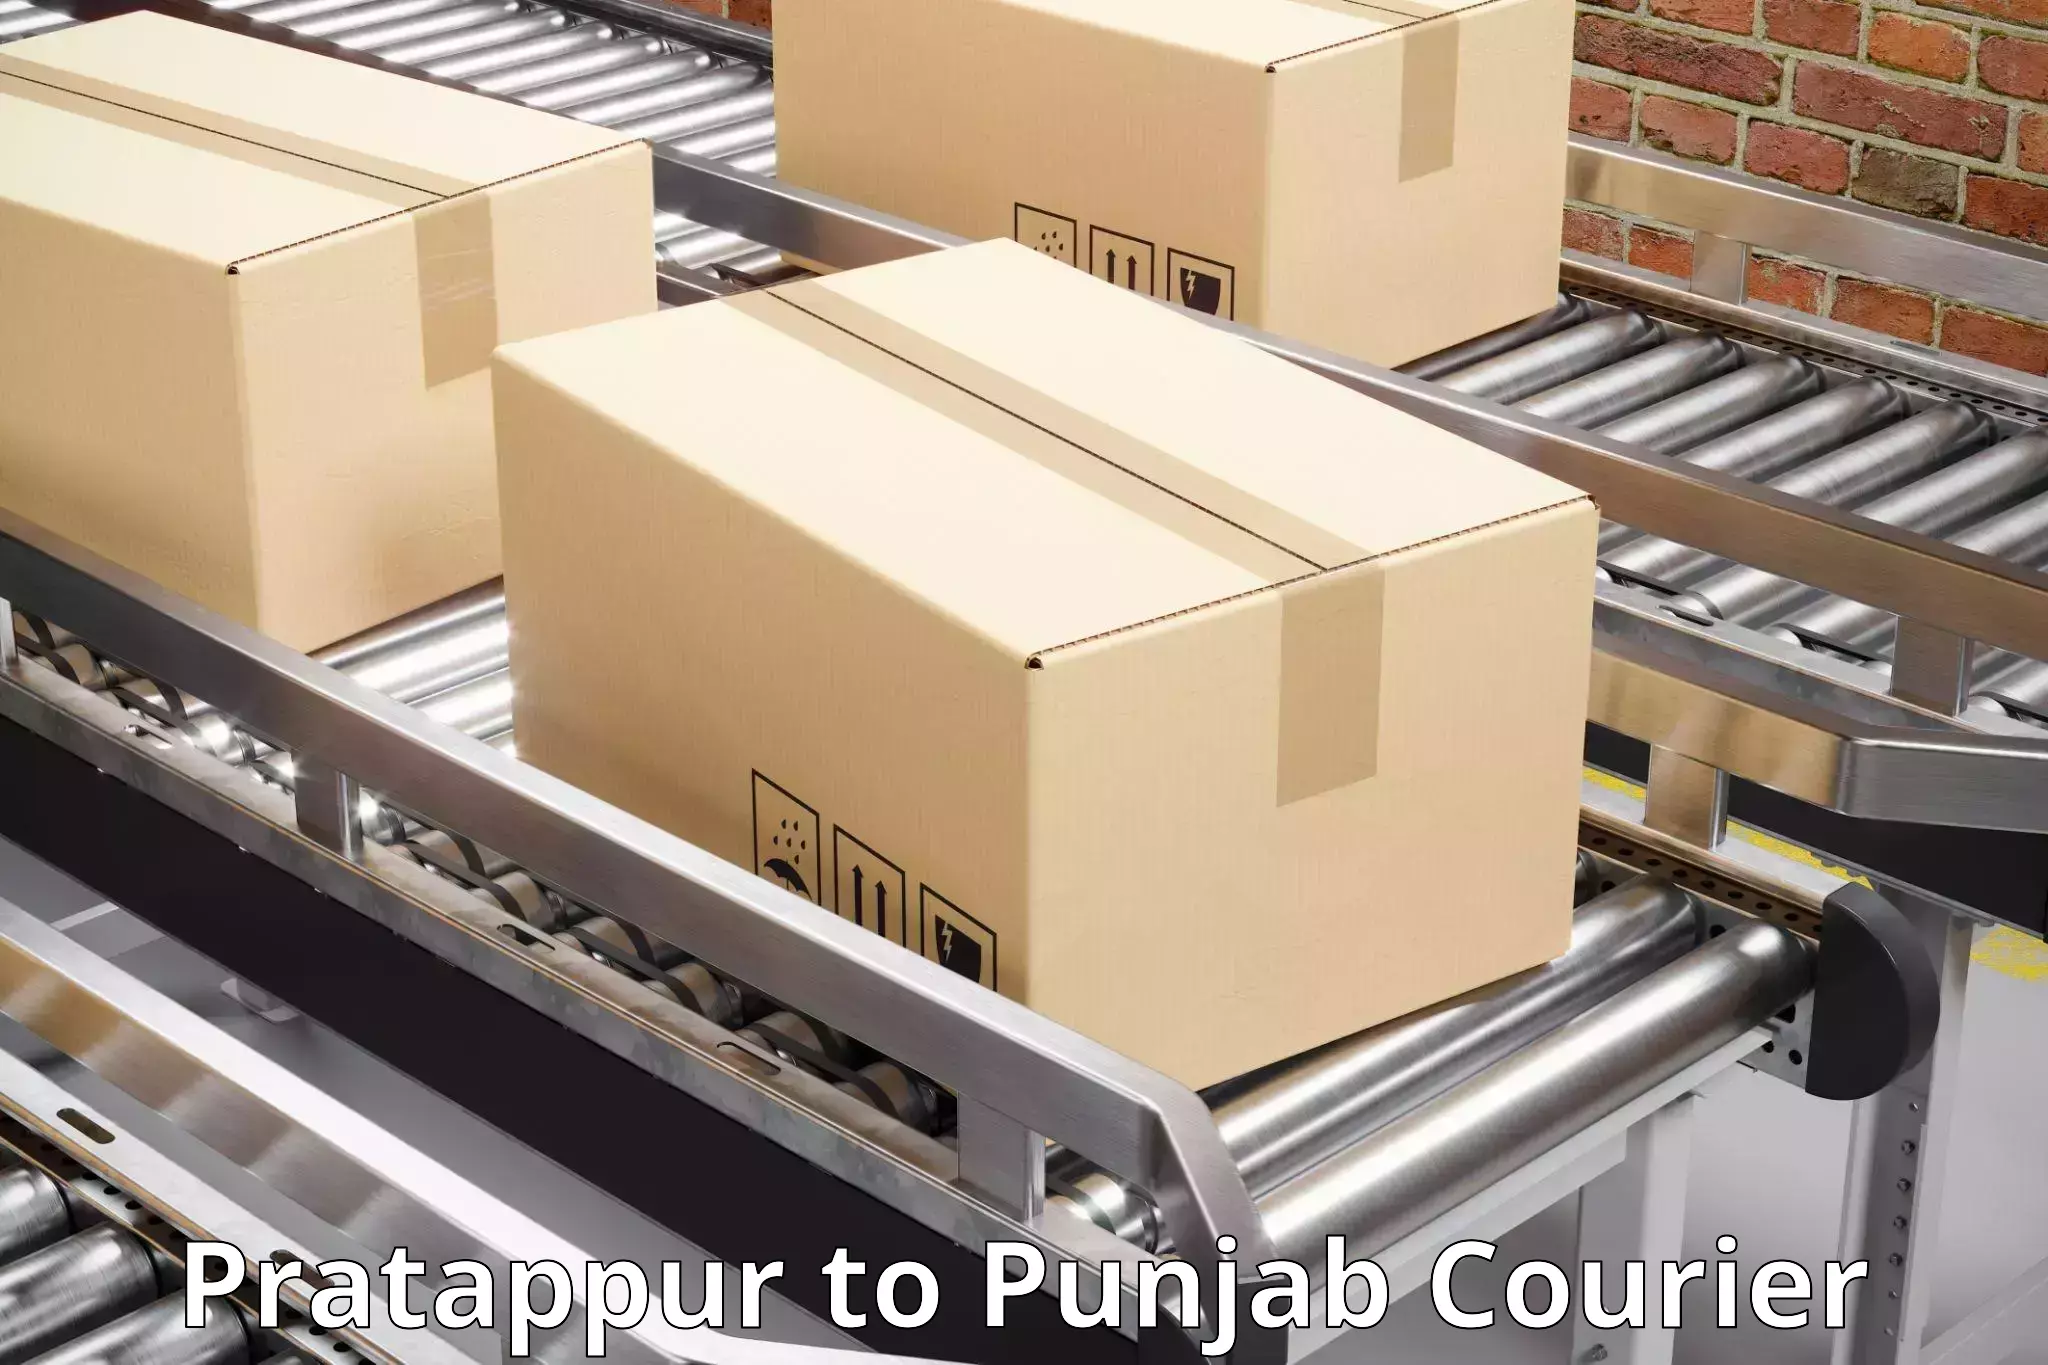 Courier rate comparison Pratappur to Kapurthala